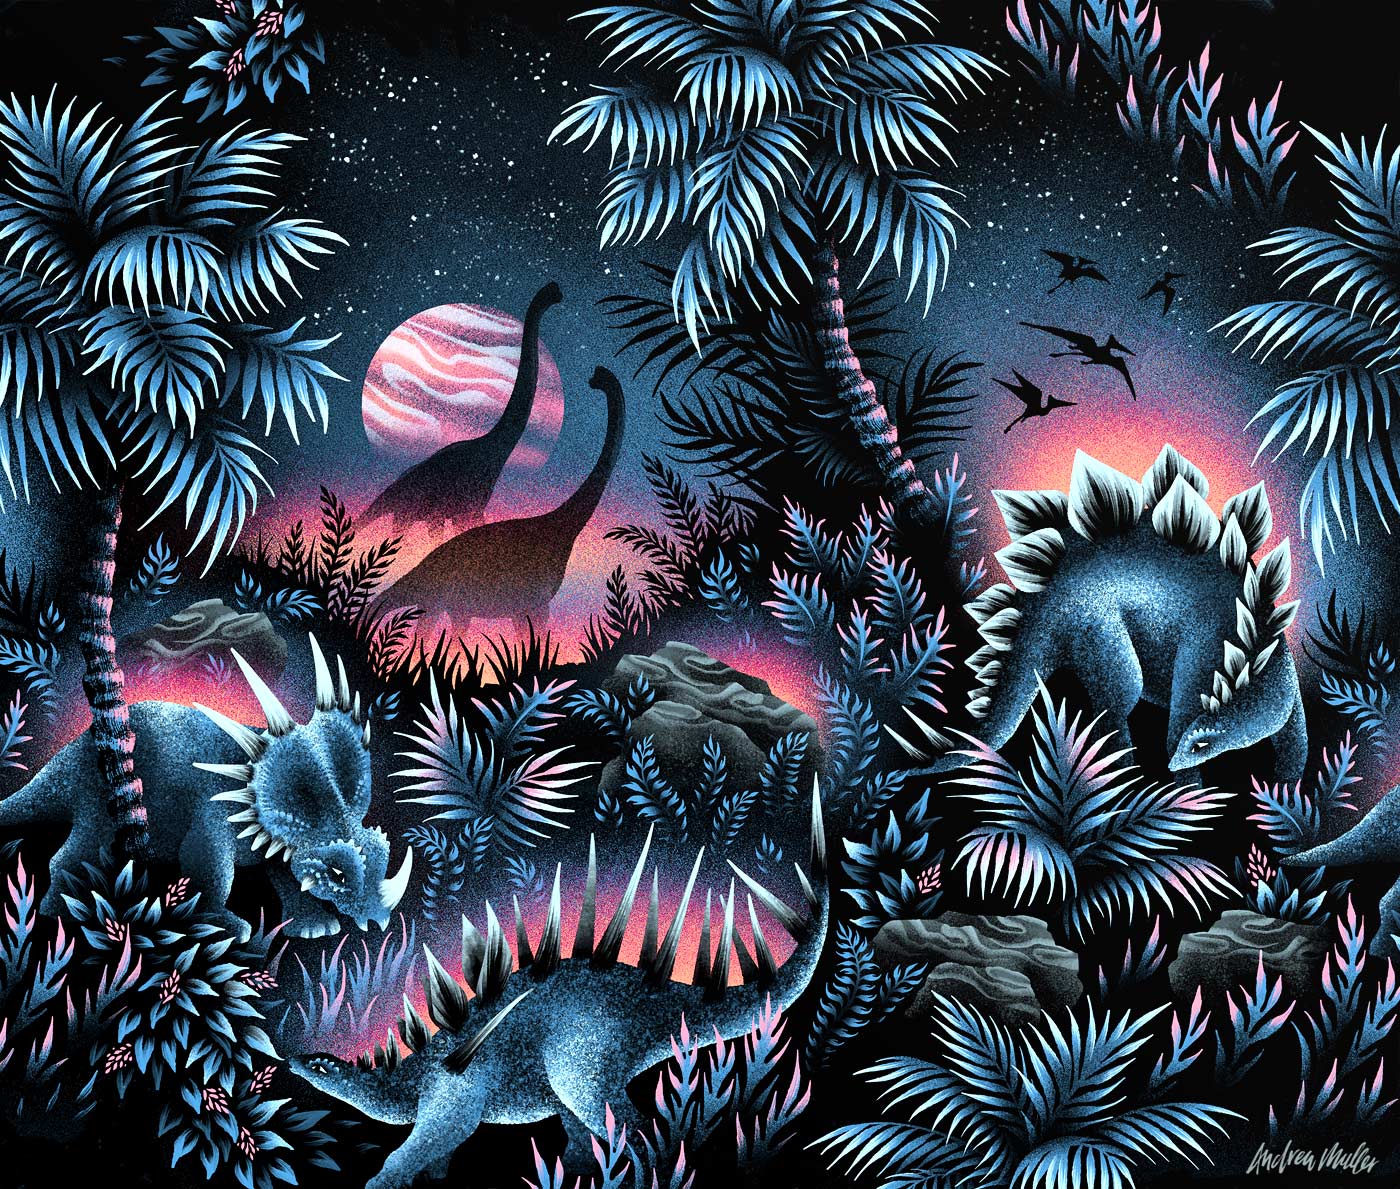 Dinosaur Lagoon artwork illustration tropical night scene by Andrea Muller